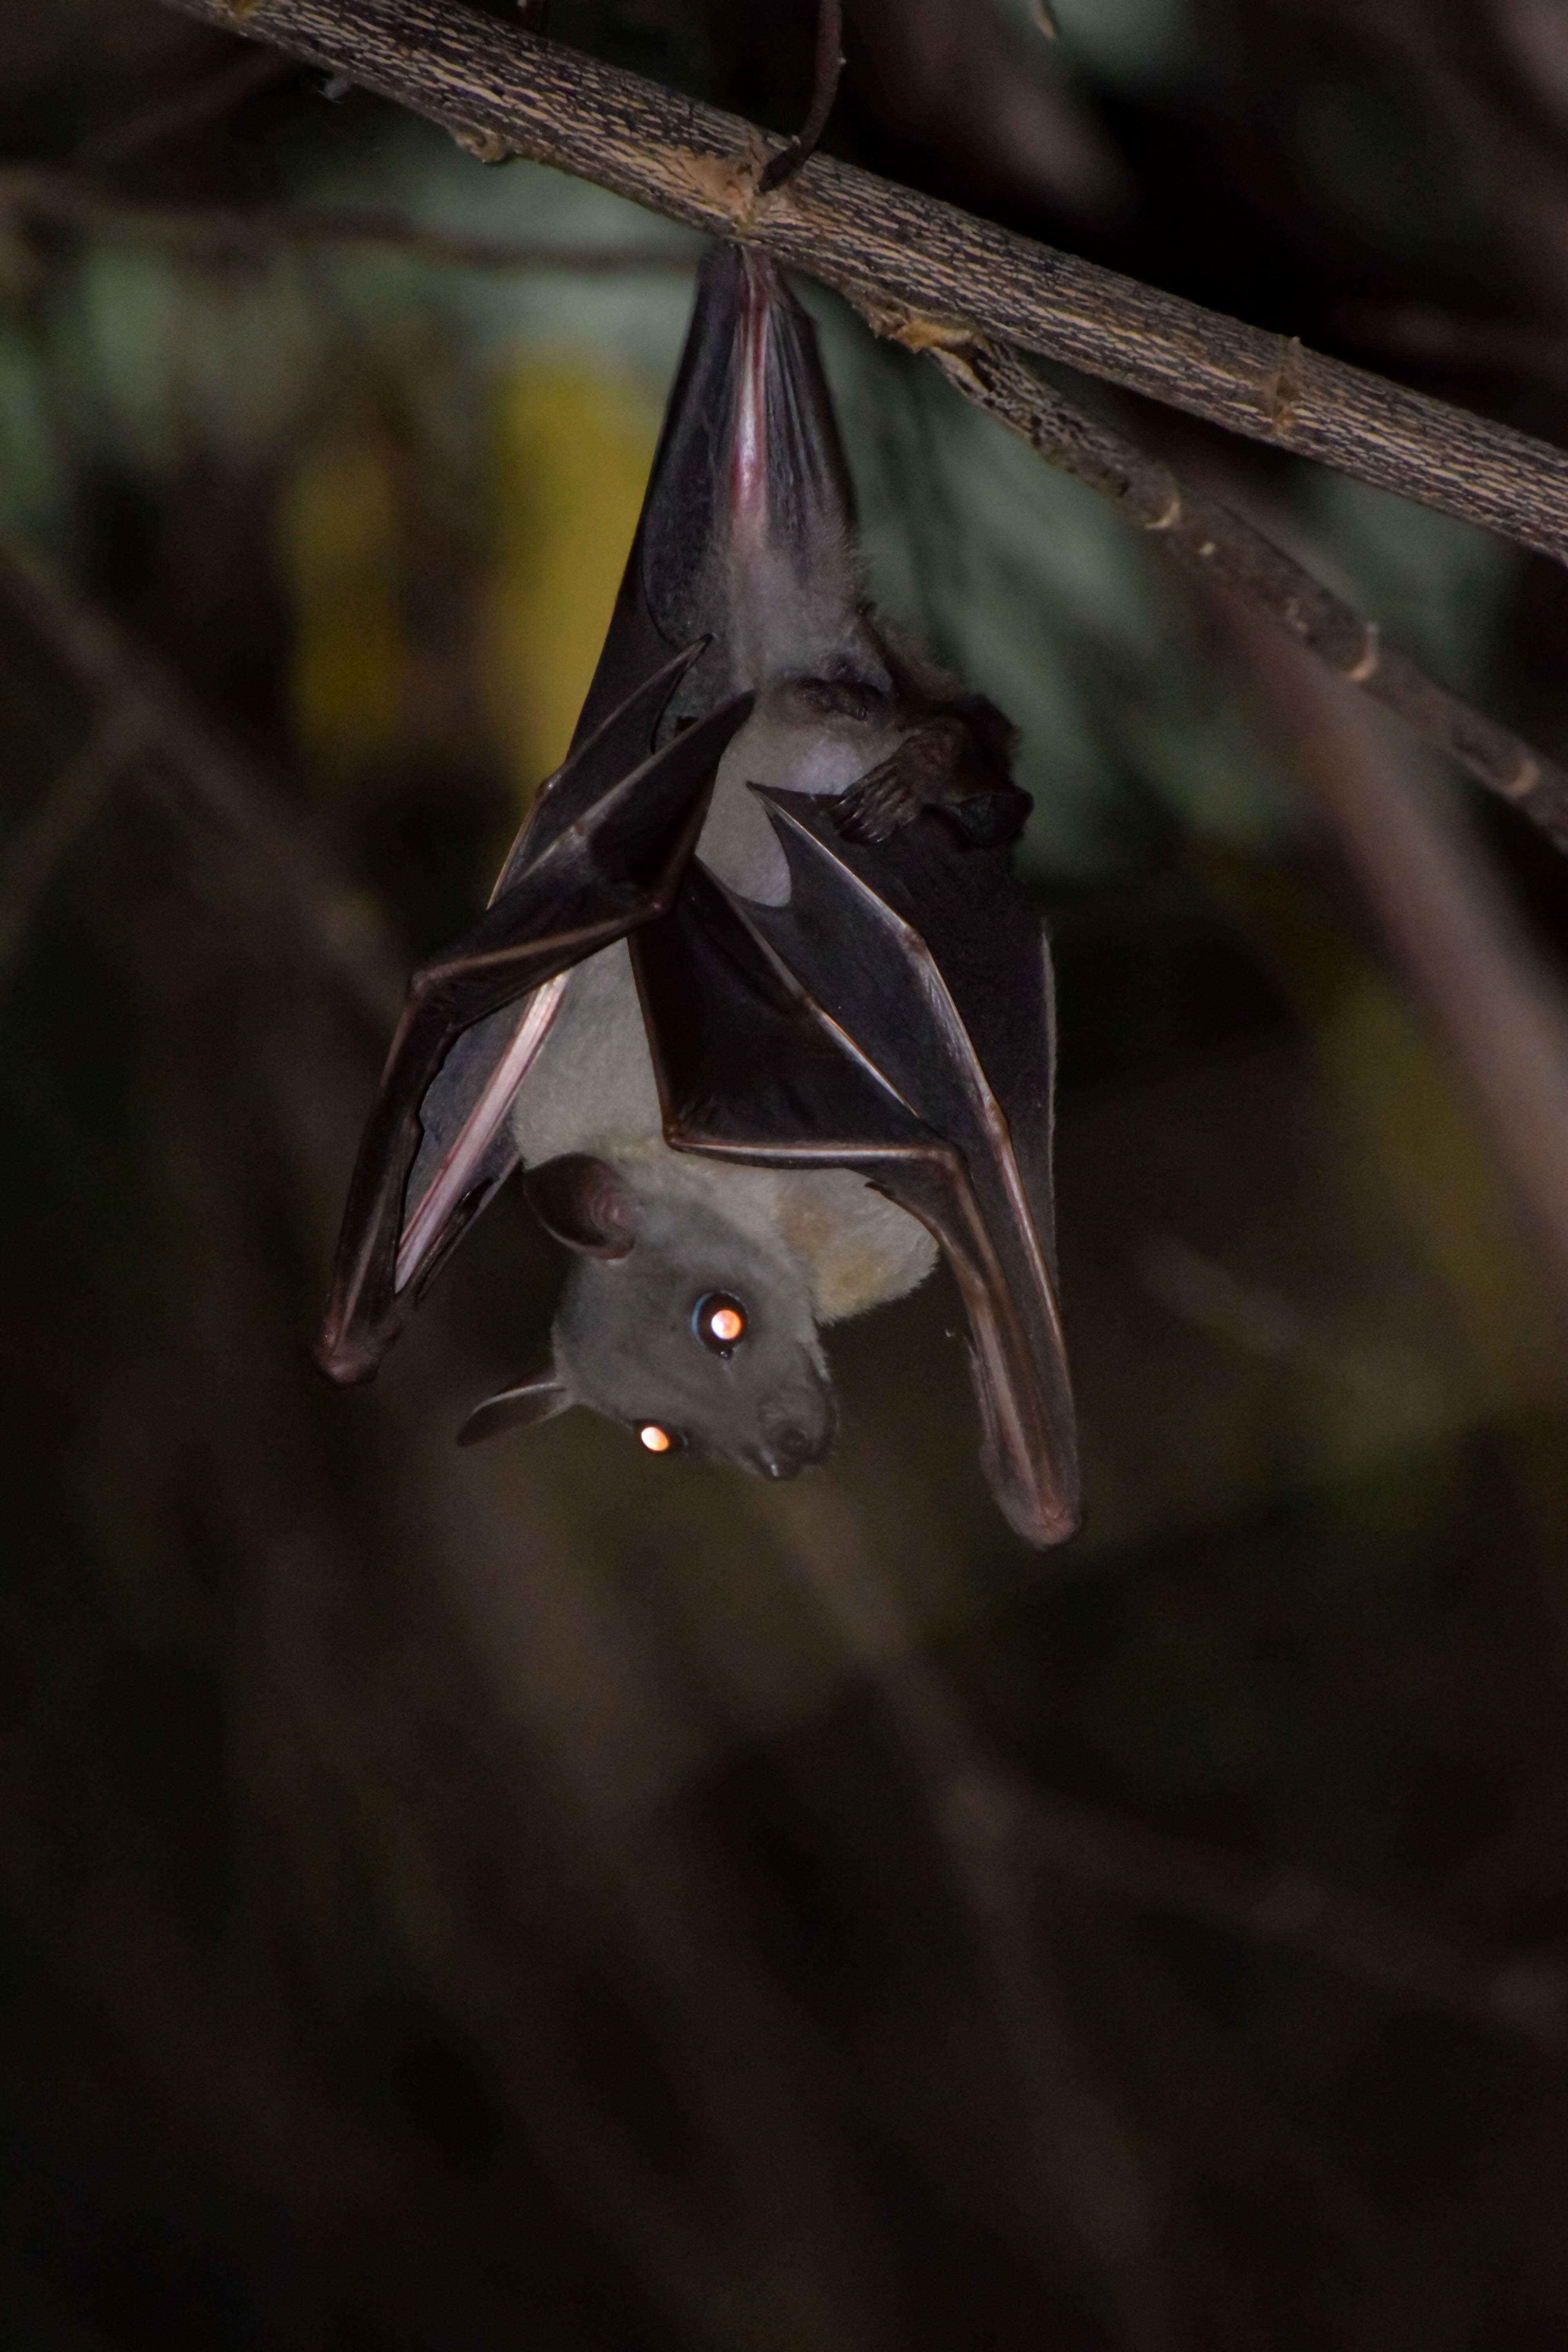 Image of Common Short-nosed Fruit Bat